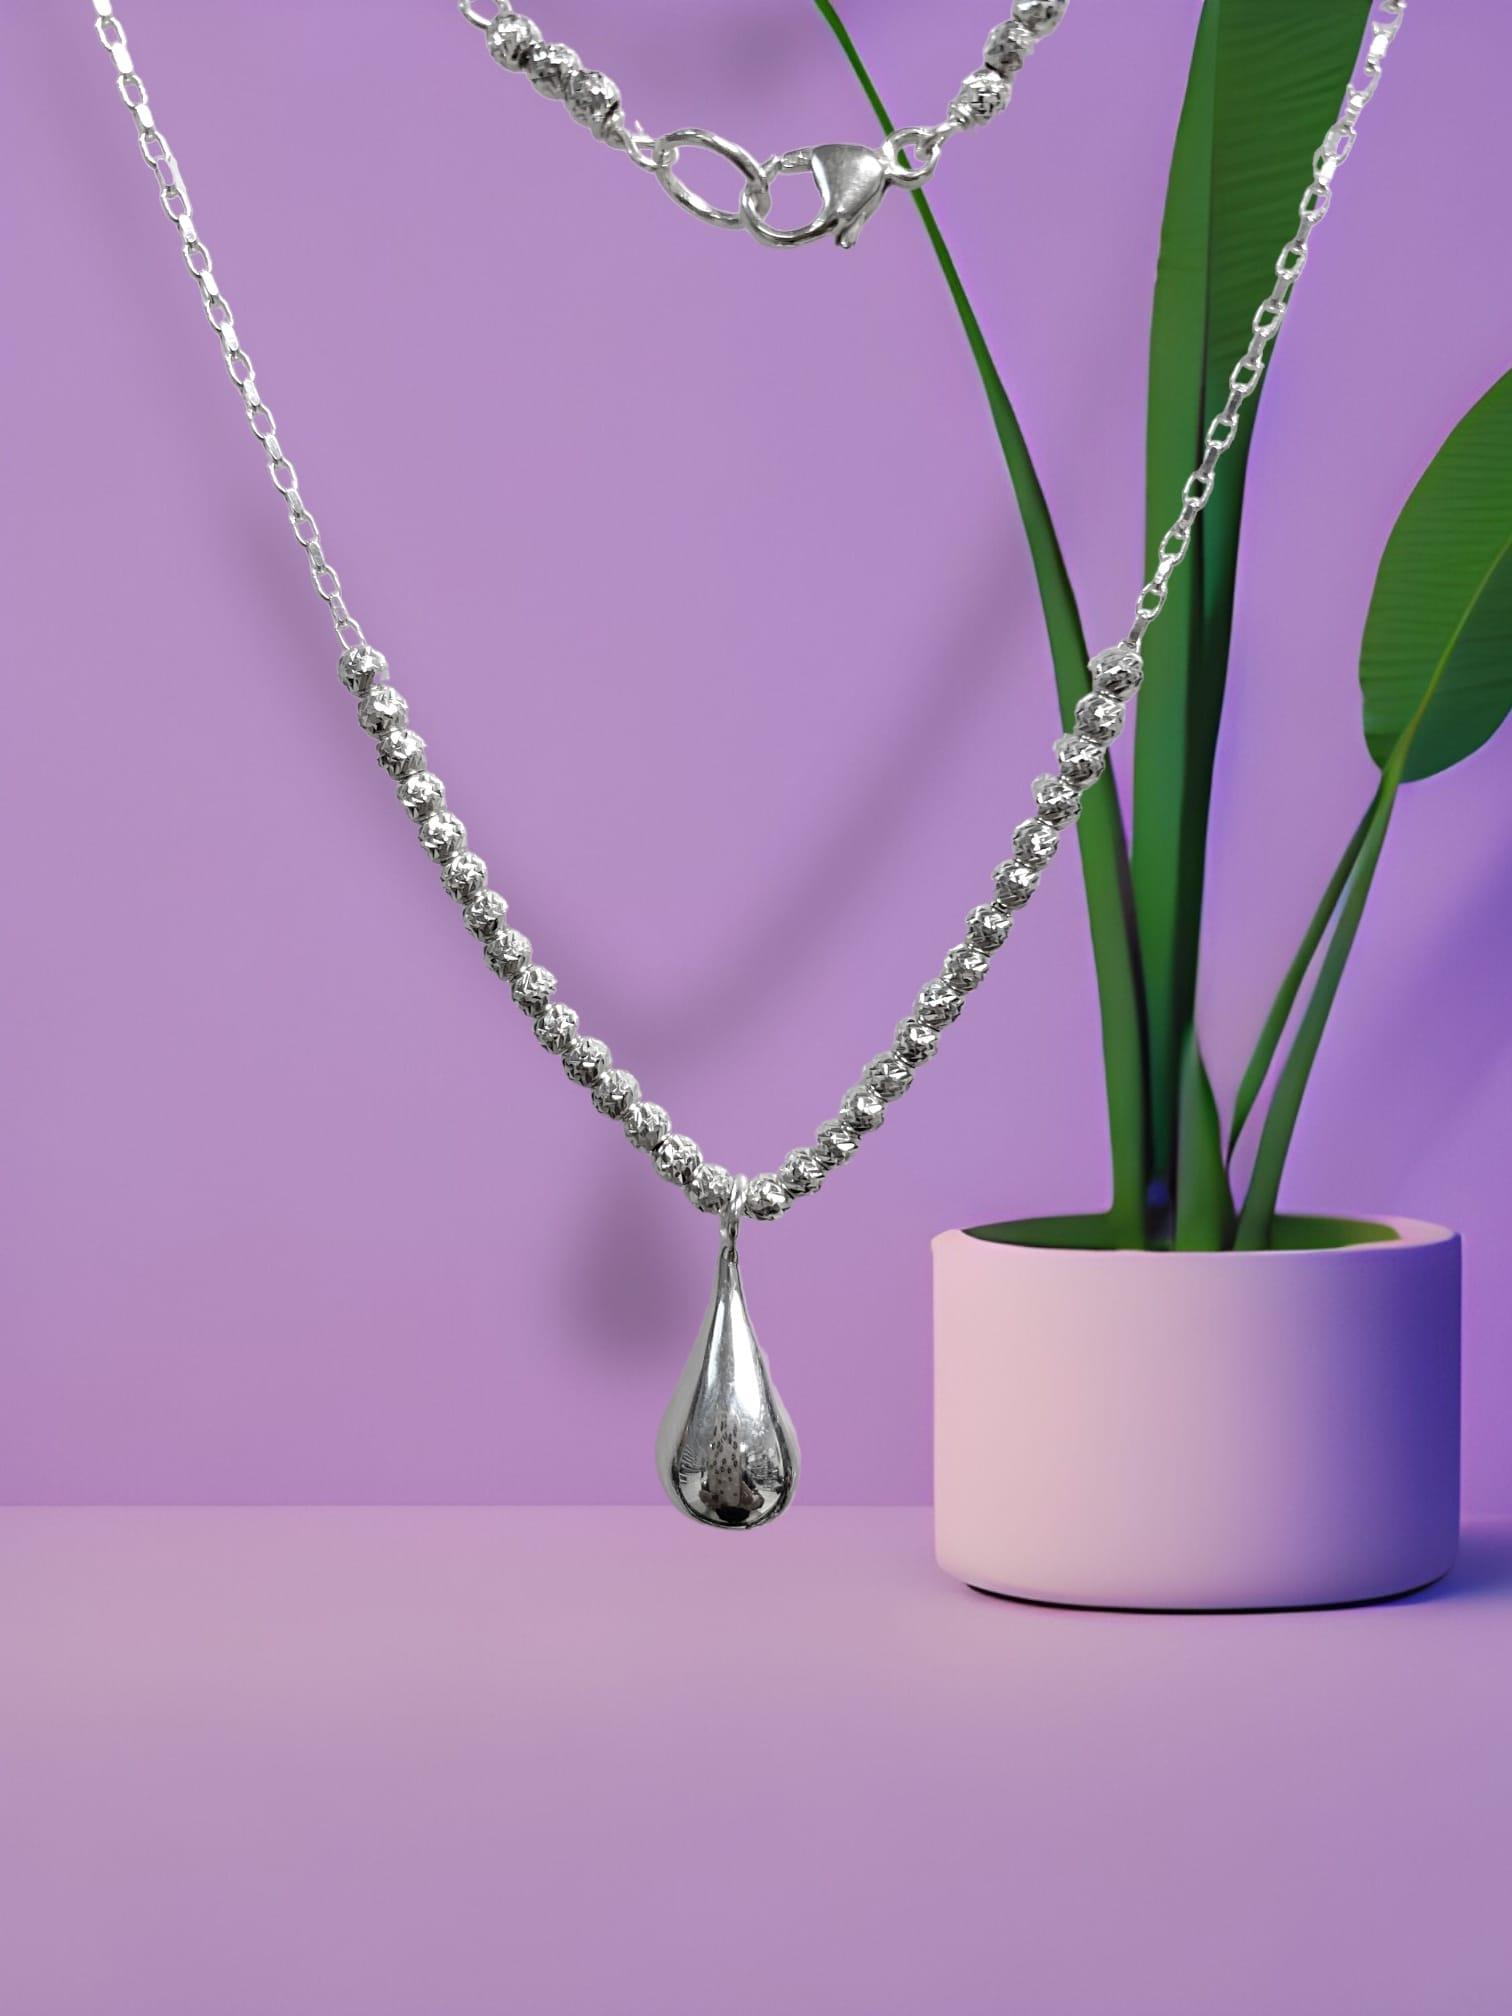 Stunning Silver Teardrop Necklace Kit